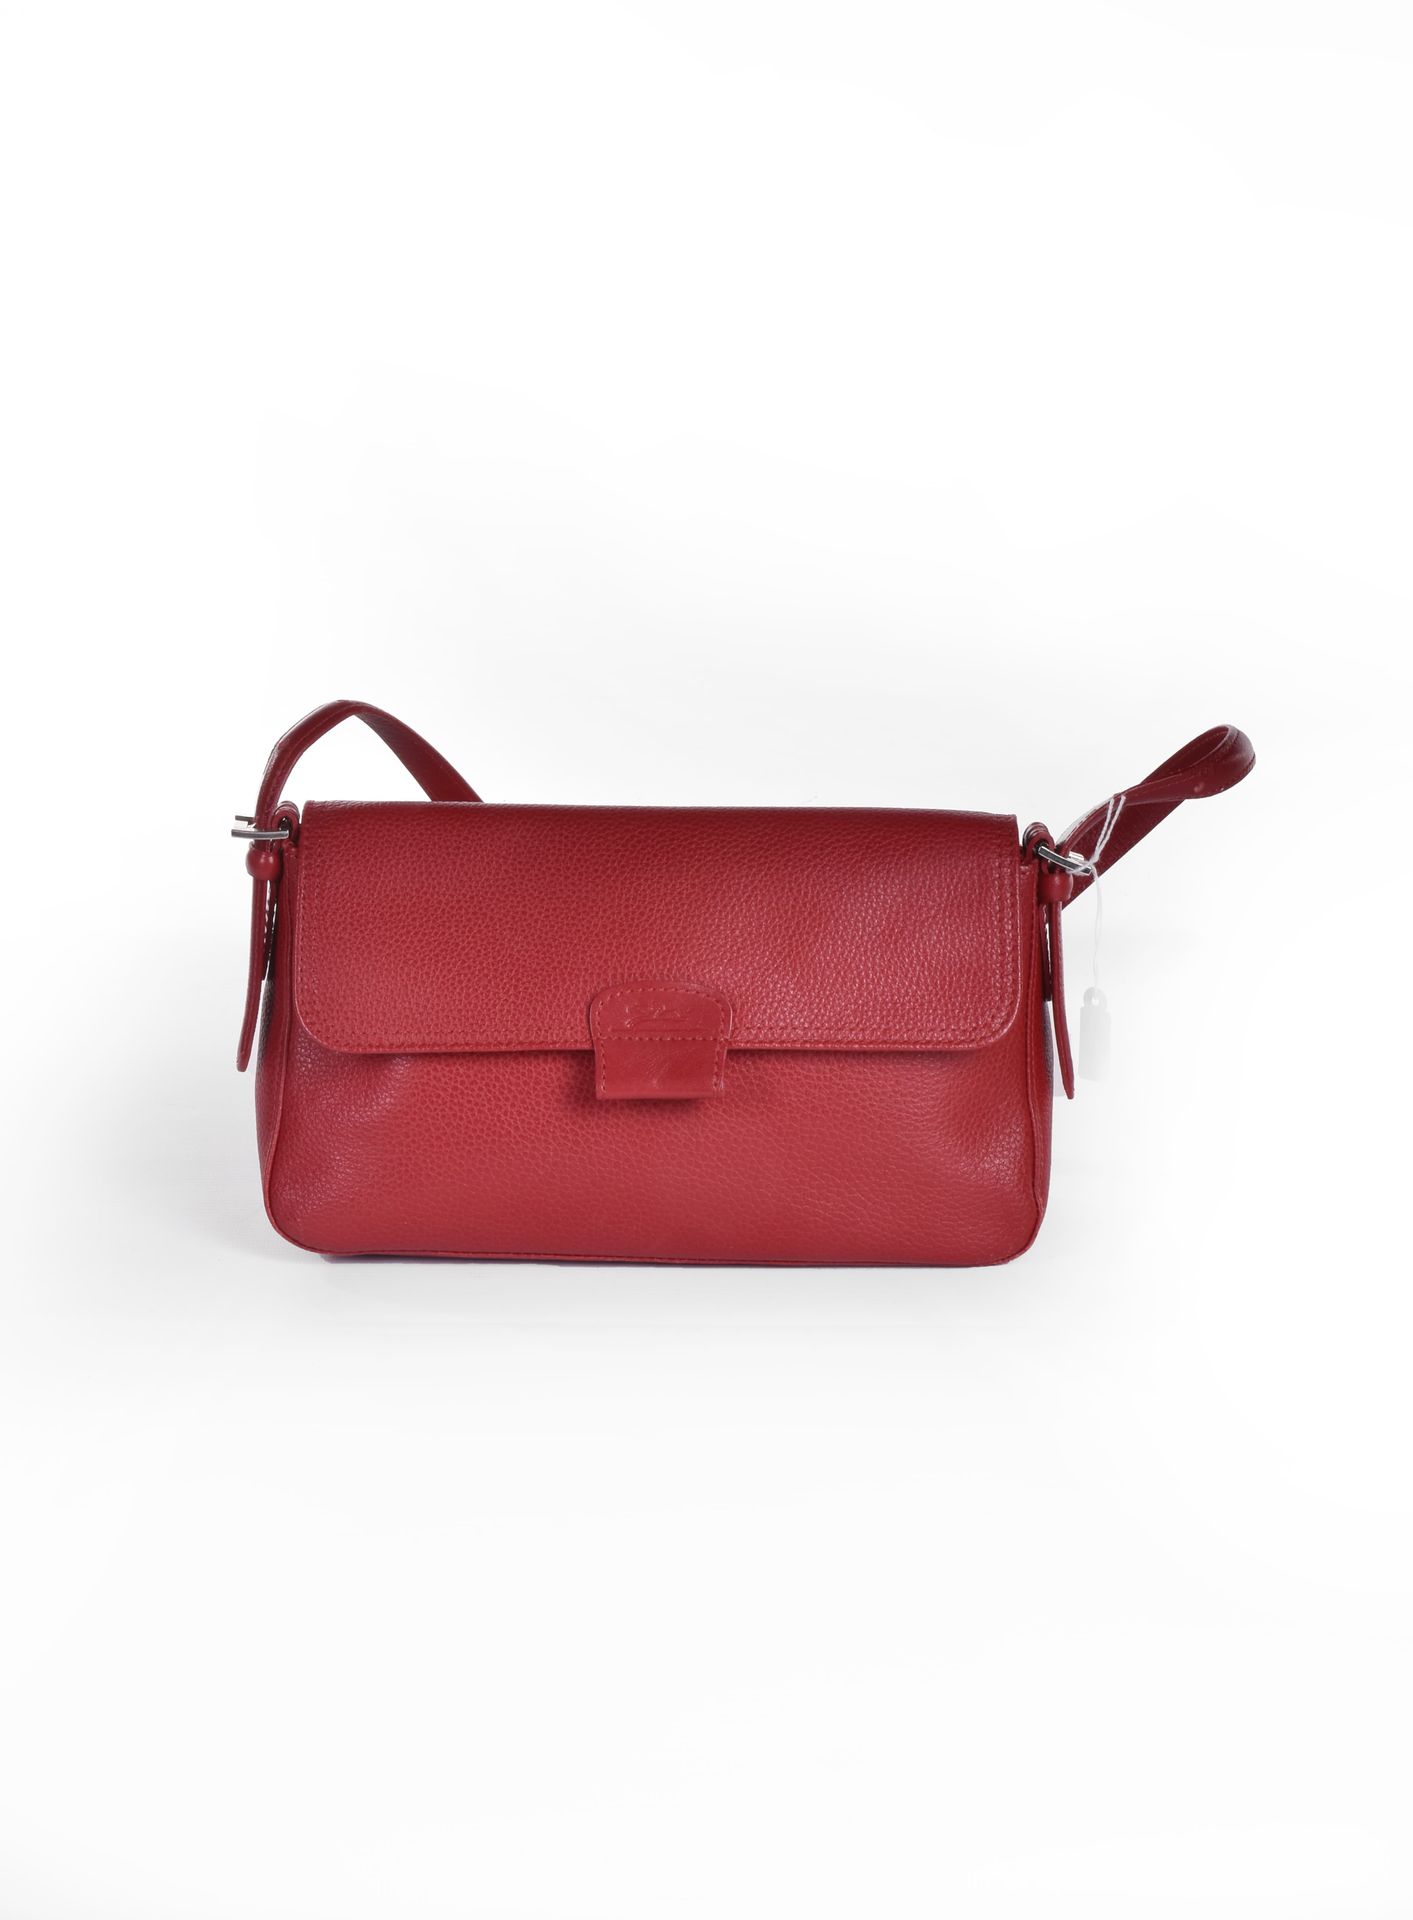 LONGCHAMP Shoulder bag.
Red leather.
Good condition, slight wear.
Height: 16 cm &hellip;